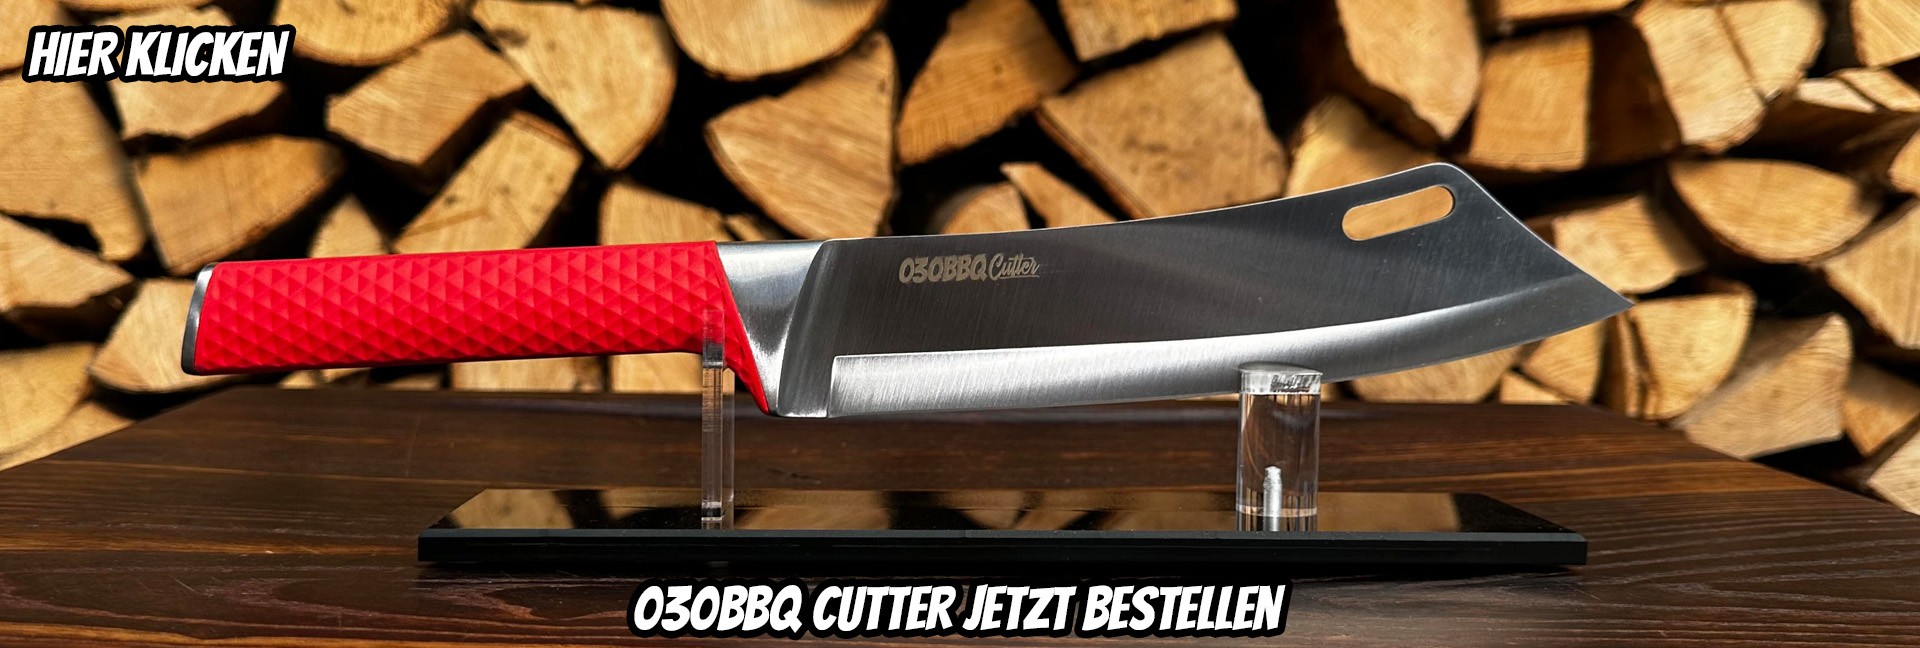 030BBQ Cutter